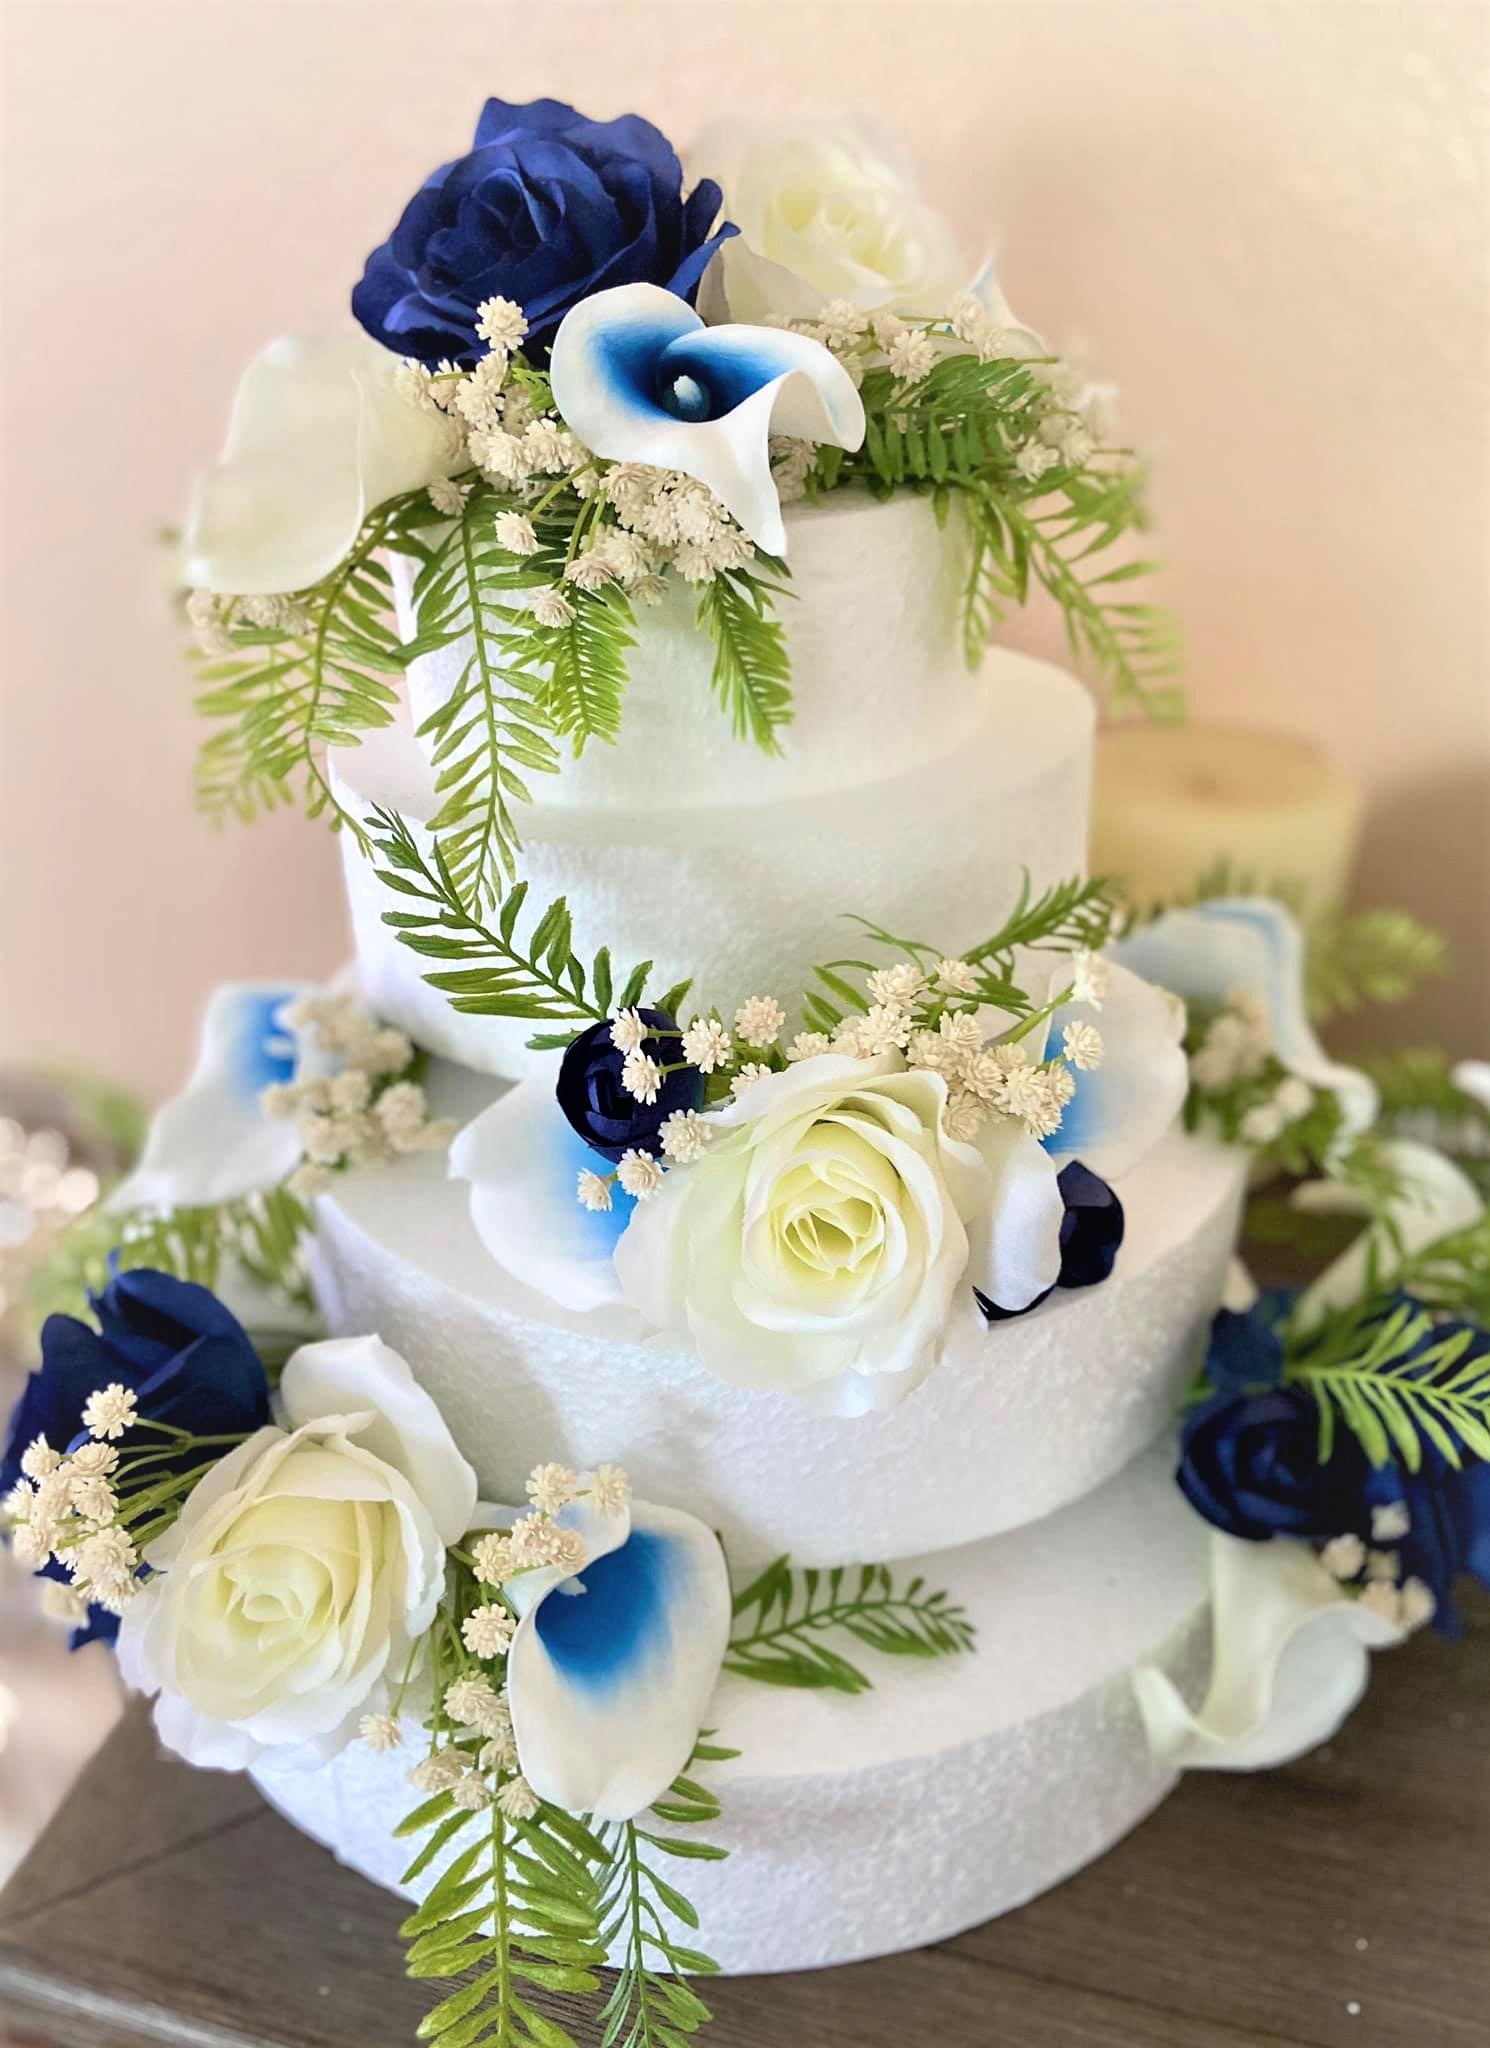 Cake Flowers Arrangements